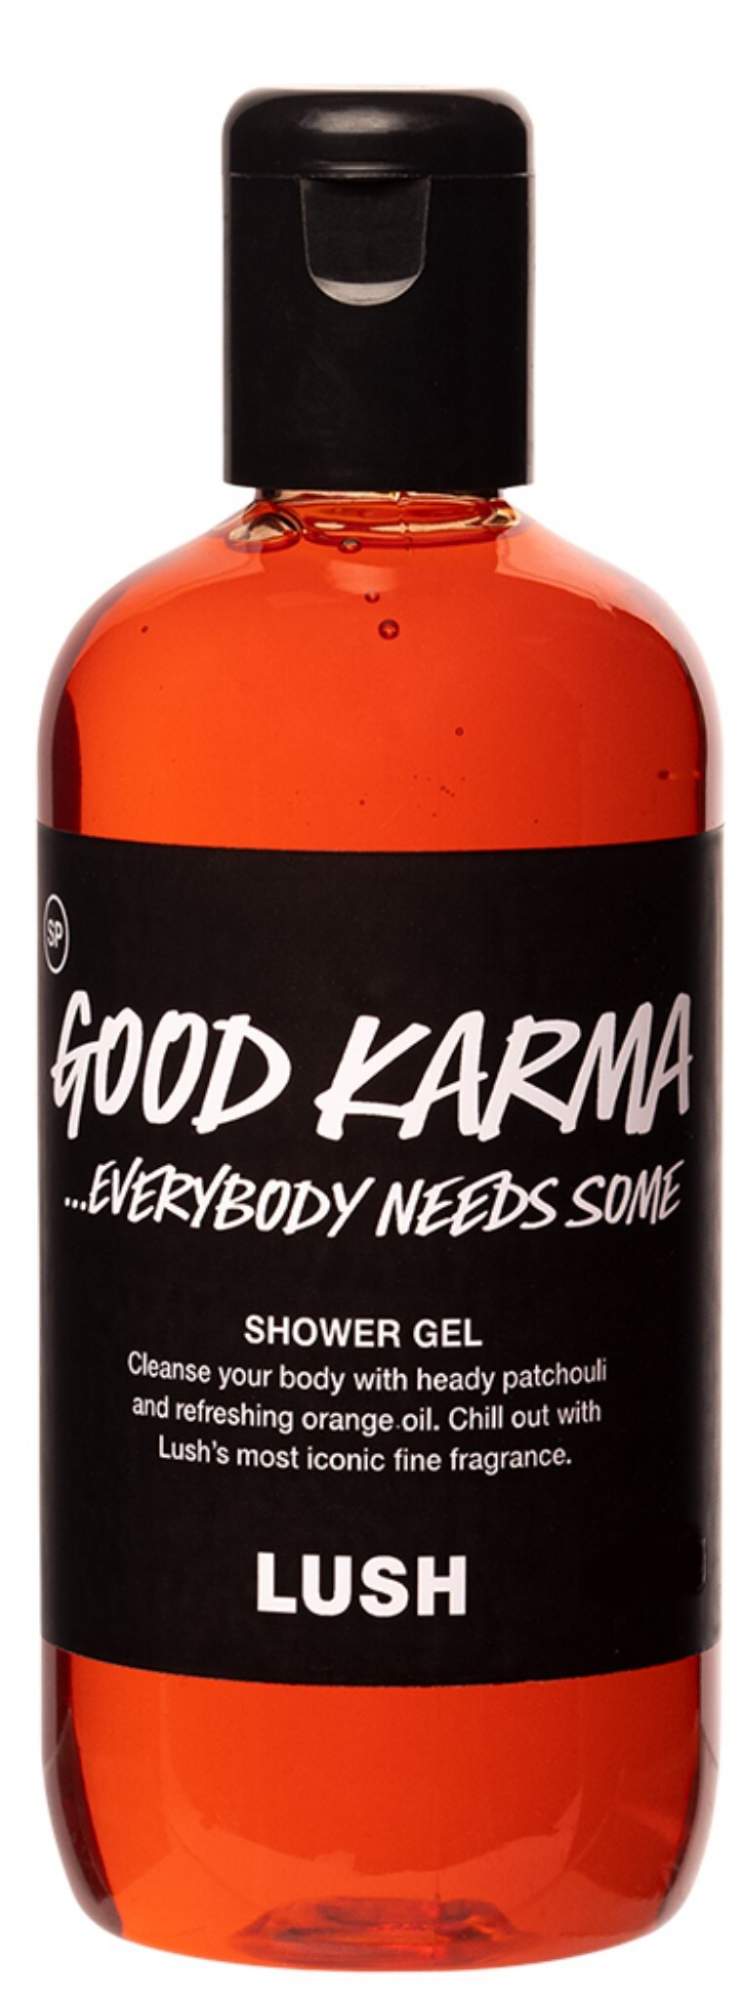 LUSH Гель для душа Good Karma...everybody needs some 550г